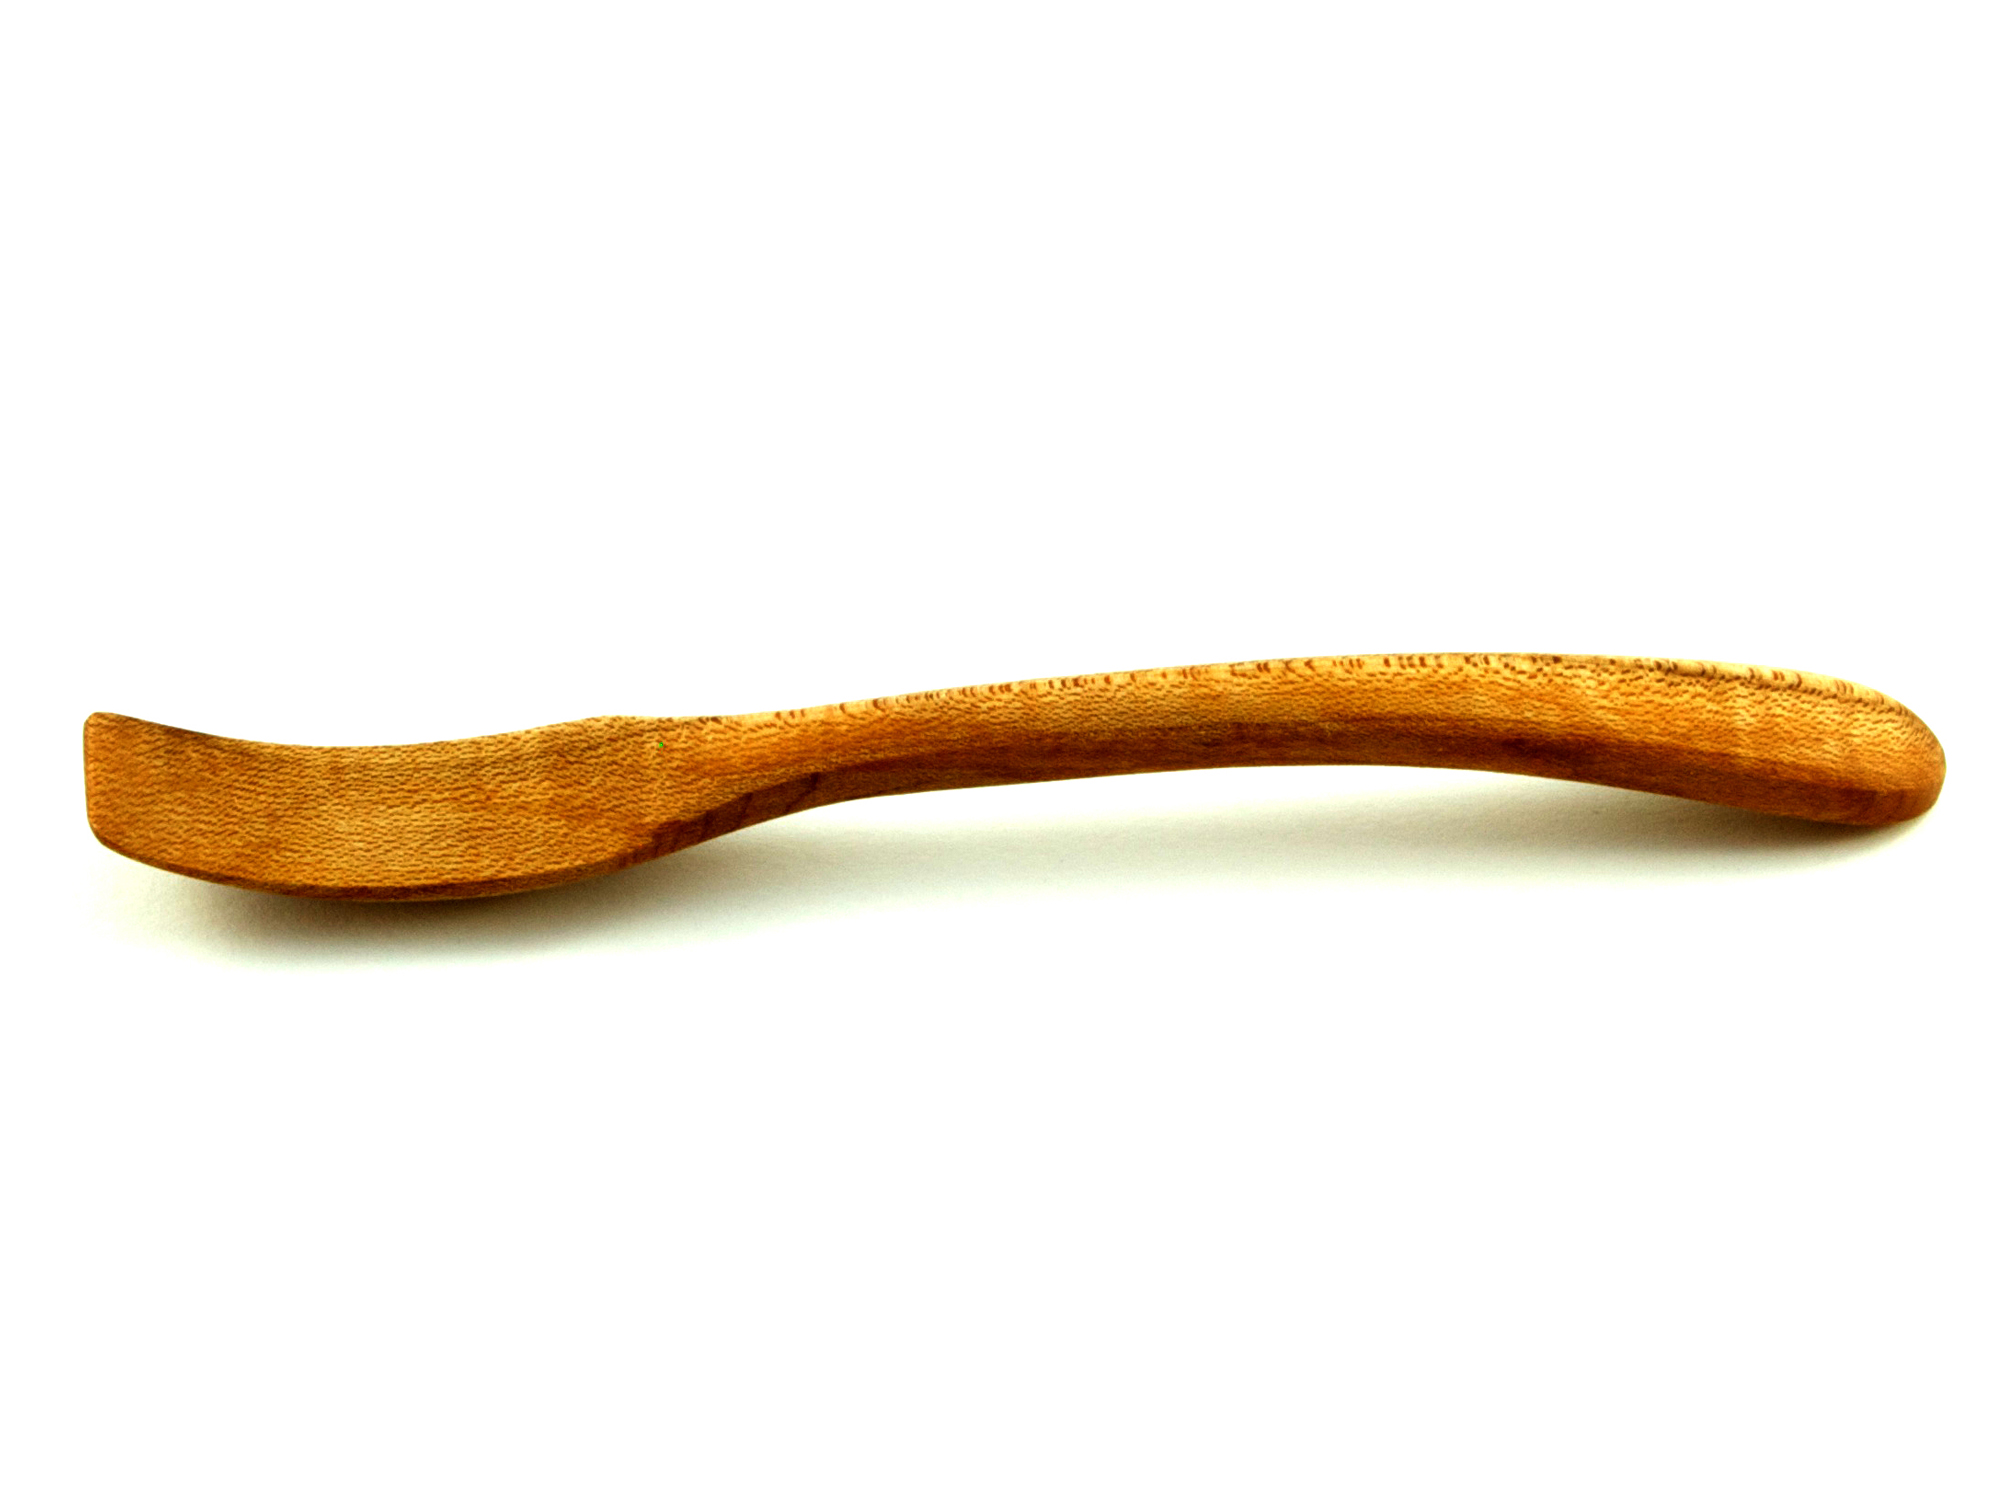 Jam Spoon - Imagine Wood